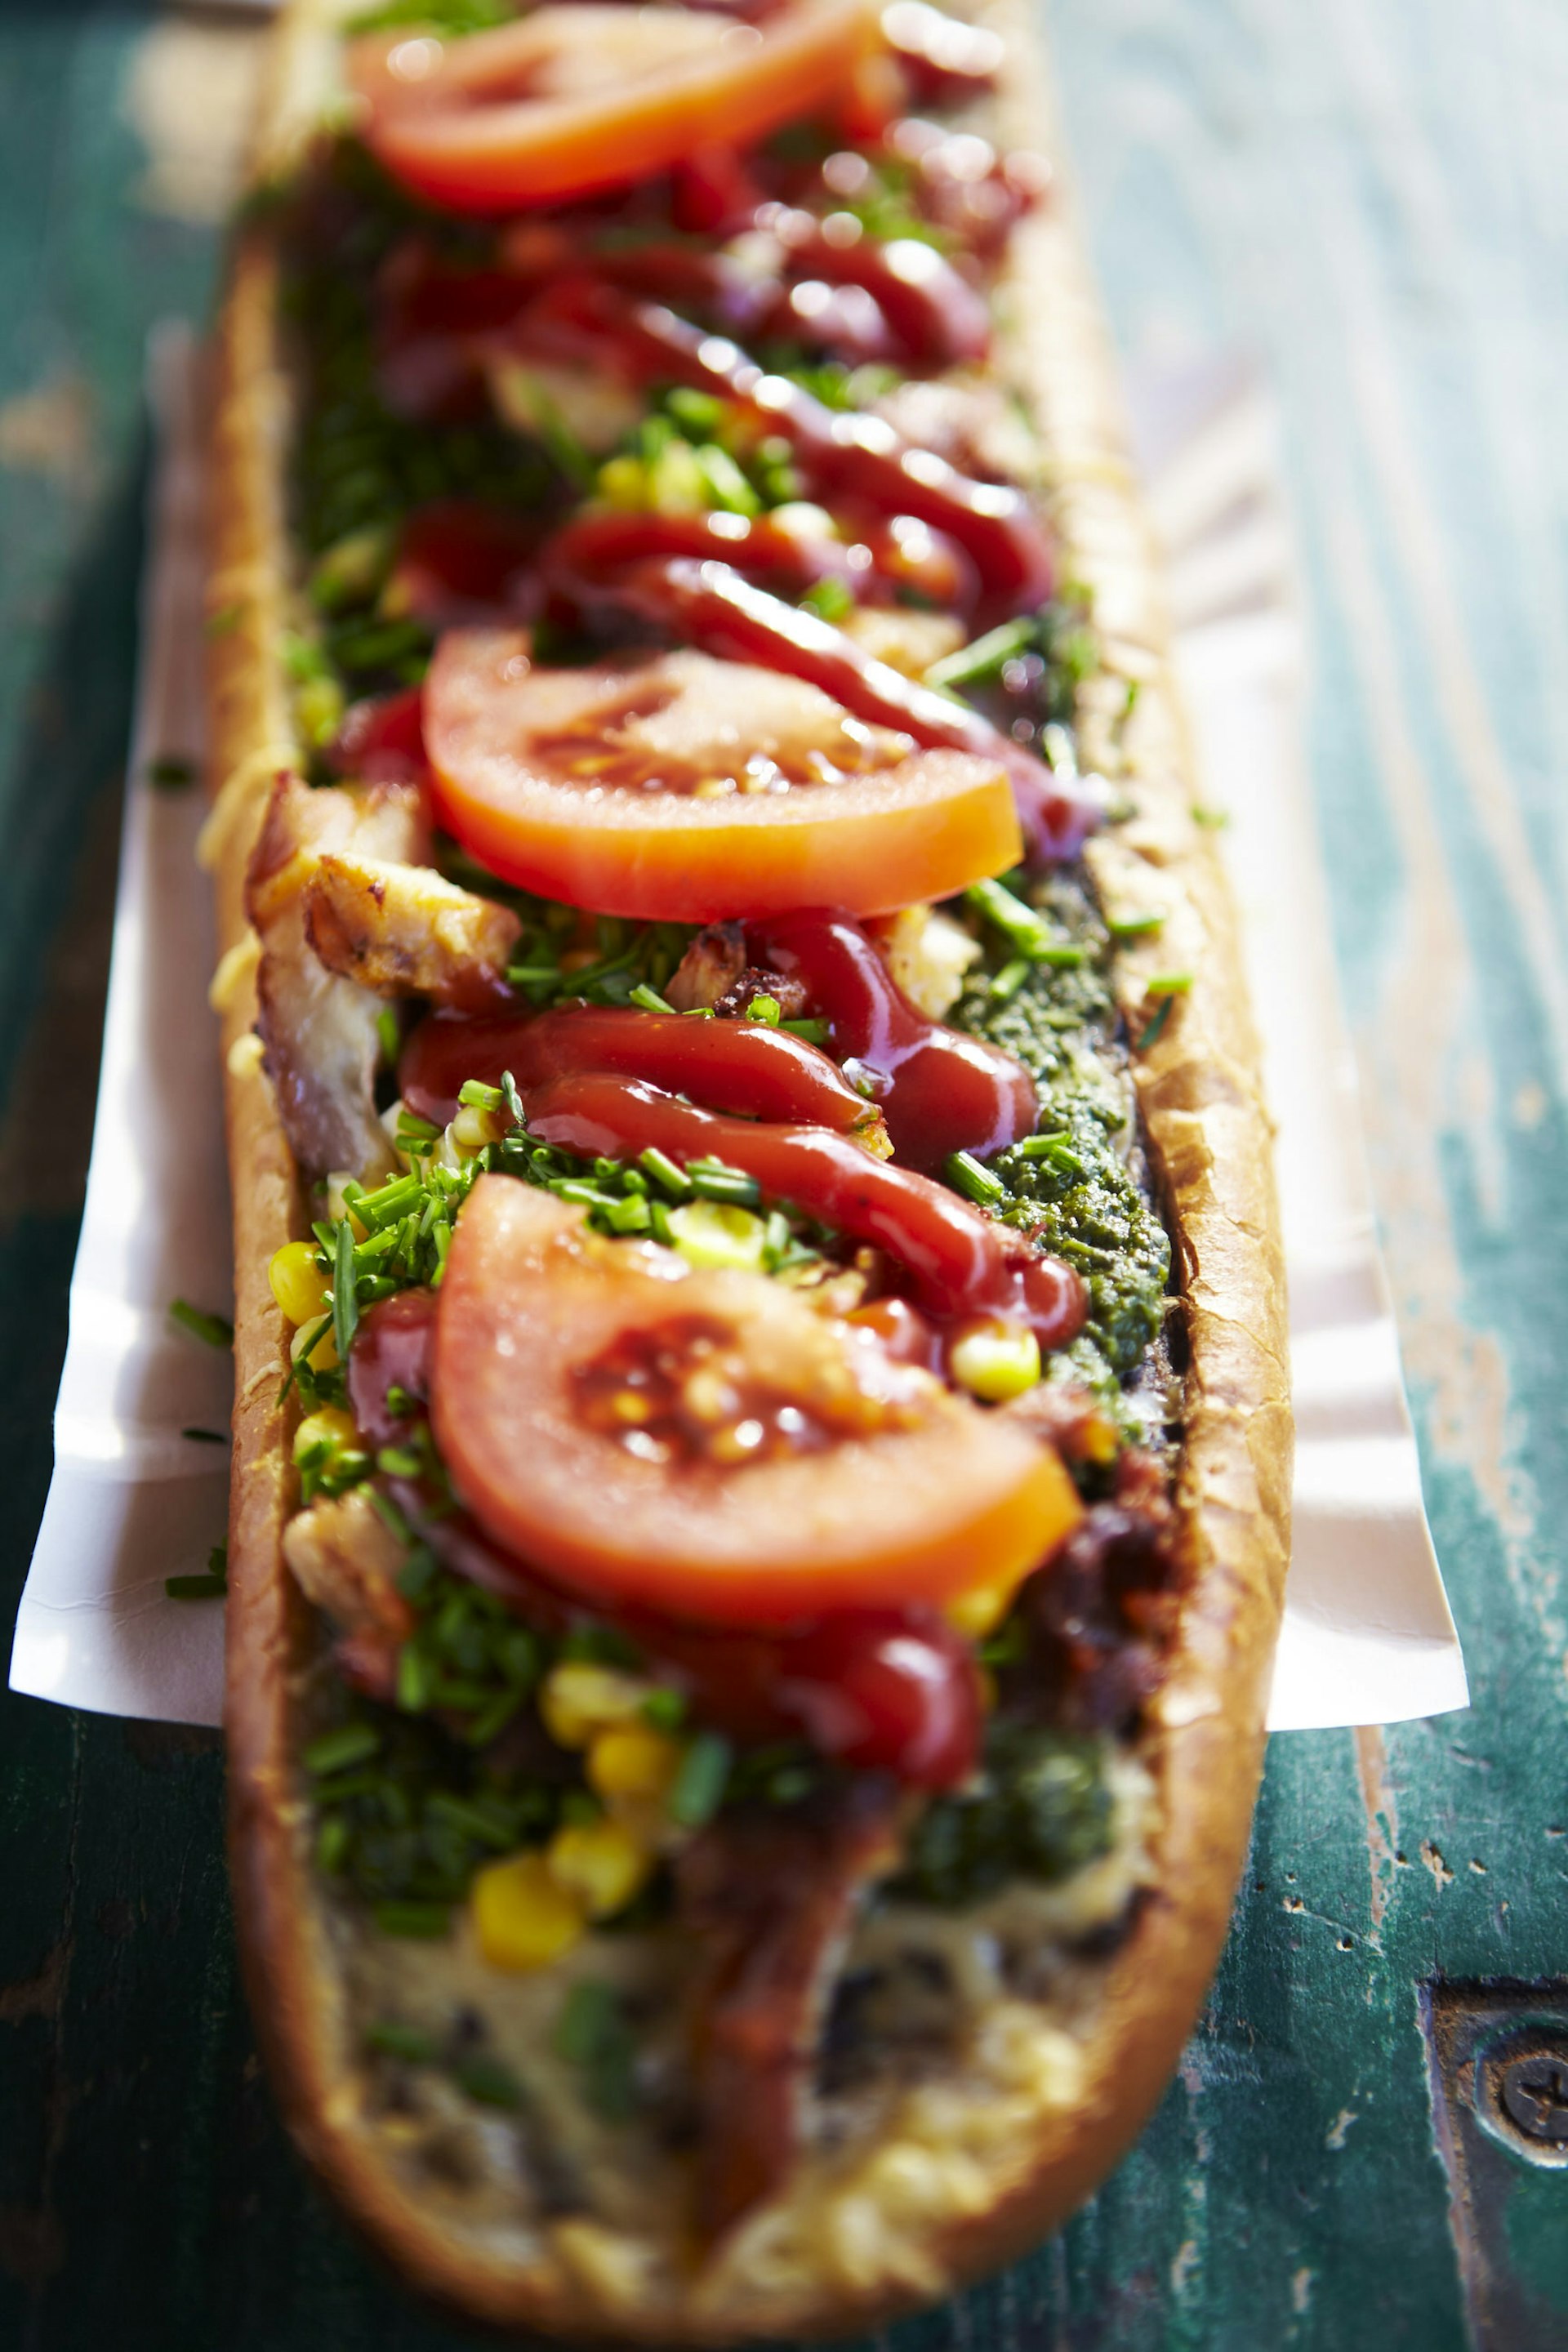 Close-up image of a <em>Zapiekanki</em> open-faced sandwich